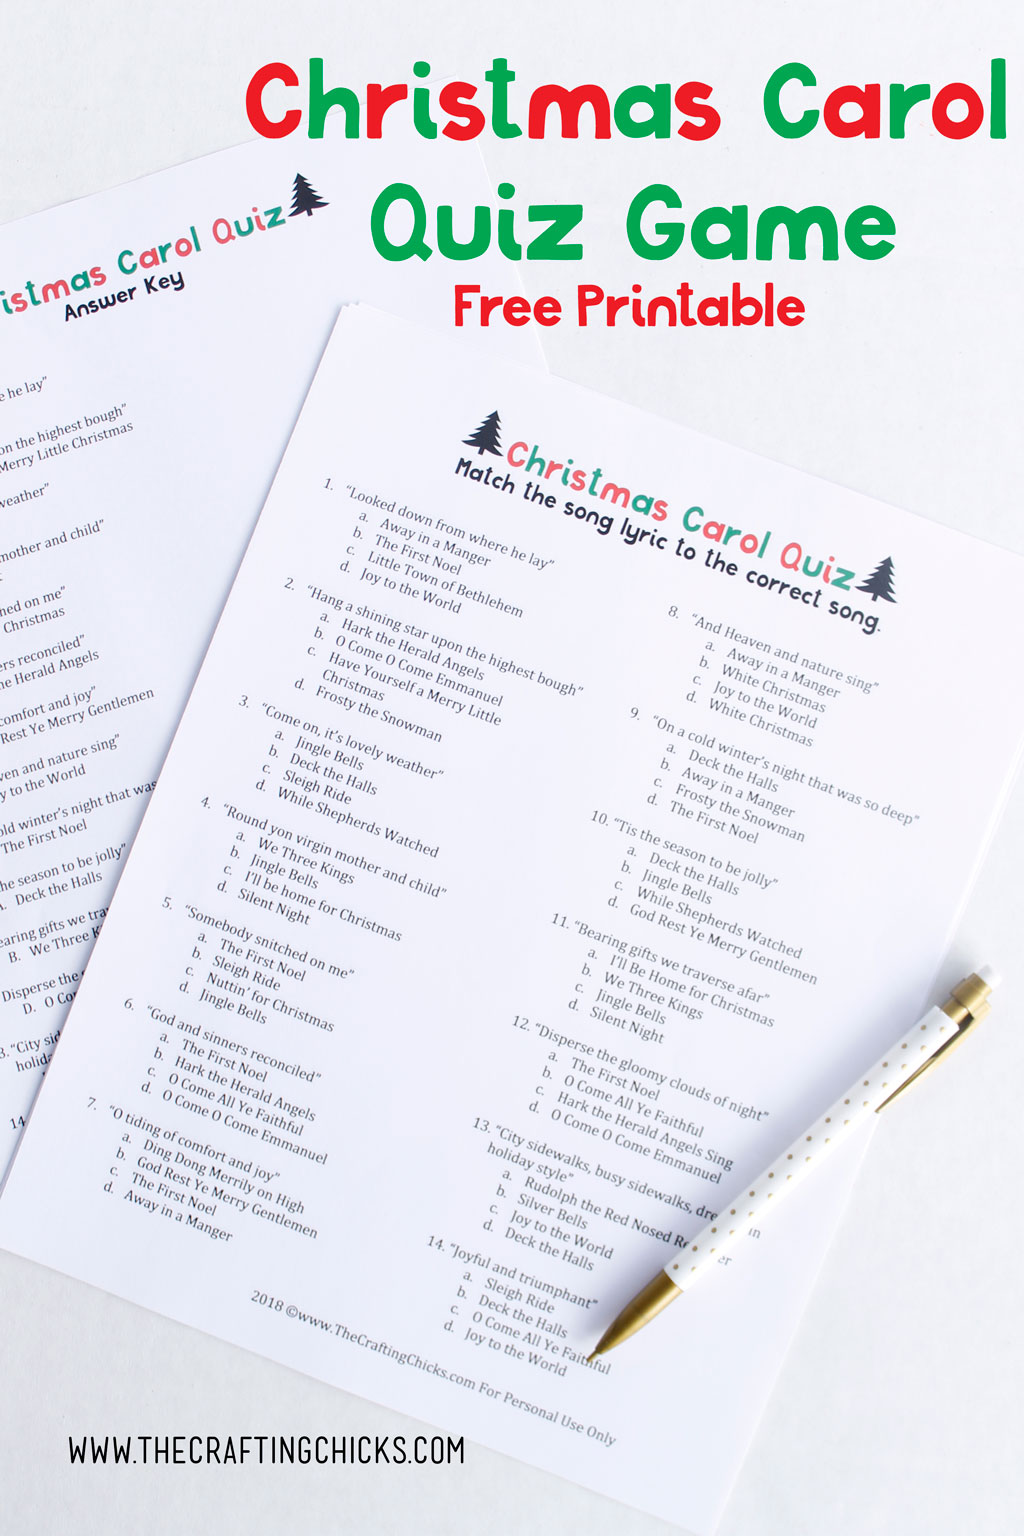 Christmas Carol Quiz game free printable game with answer key